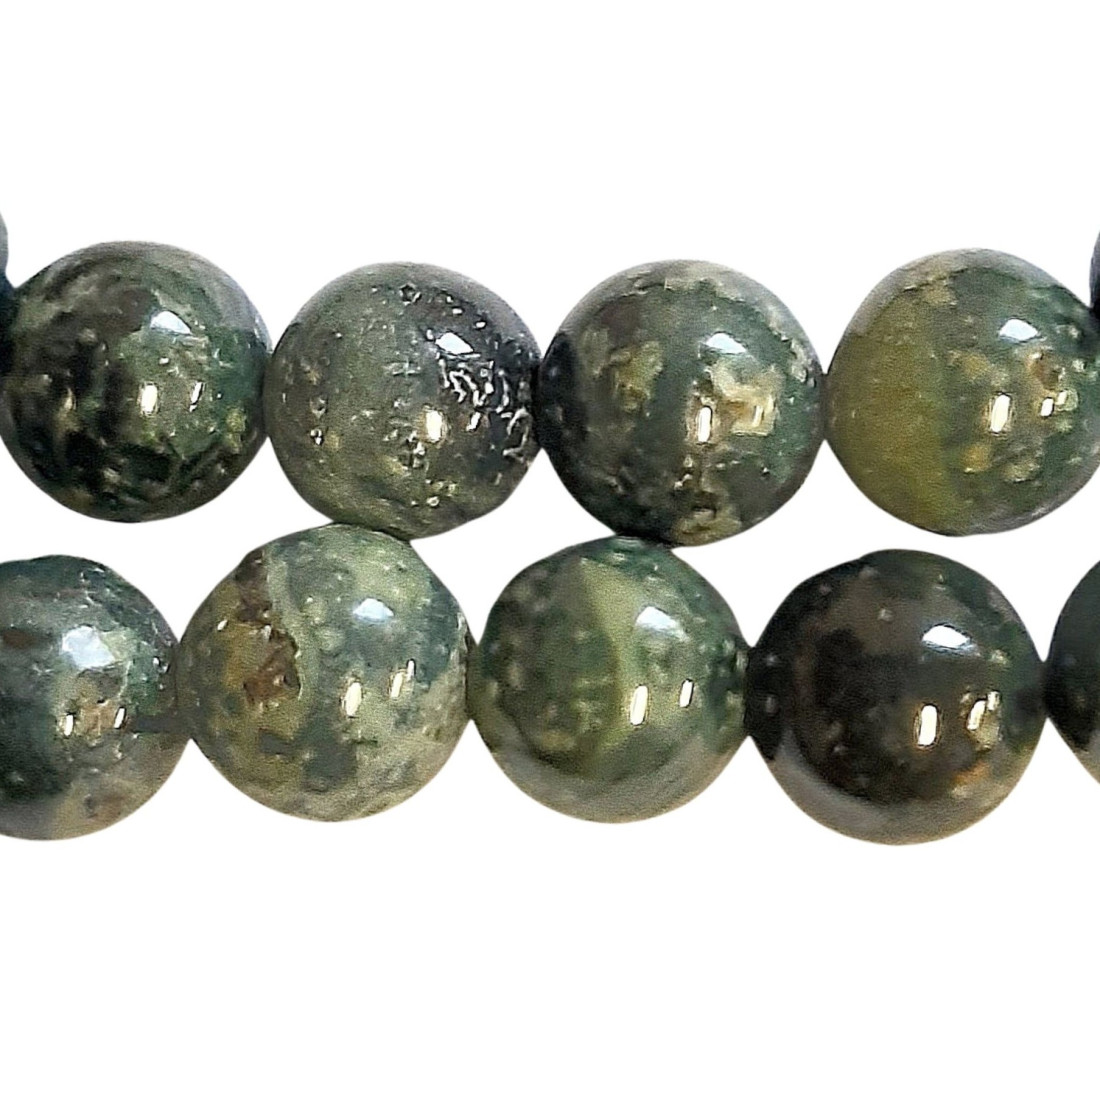 Fil de 48 perles rondes 8mm 8 mm en jaspe vert kambaba